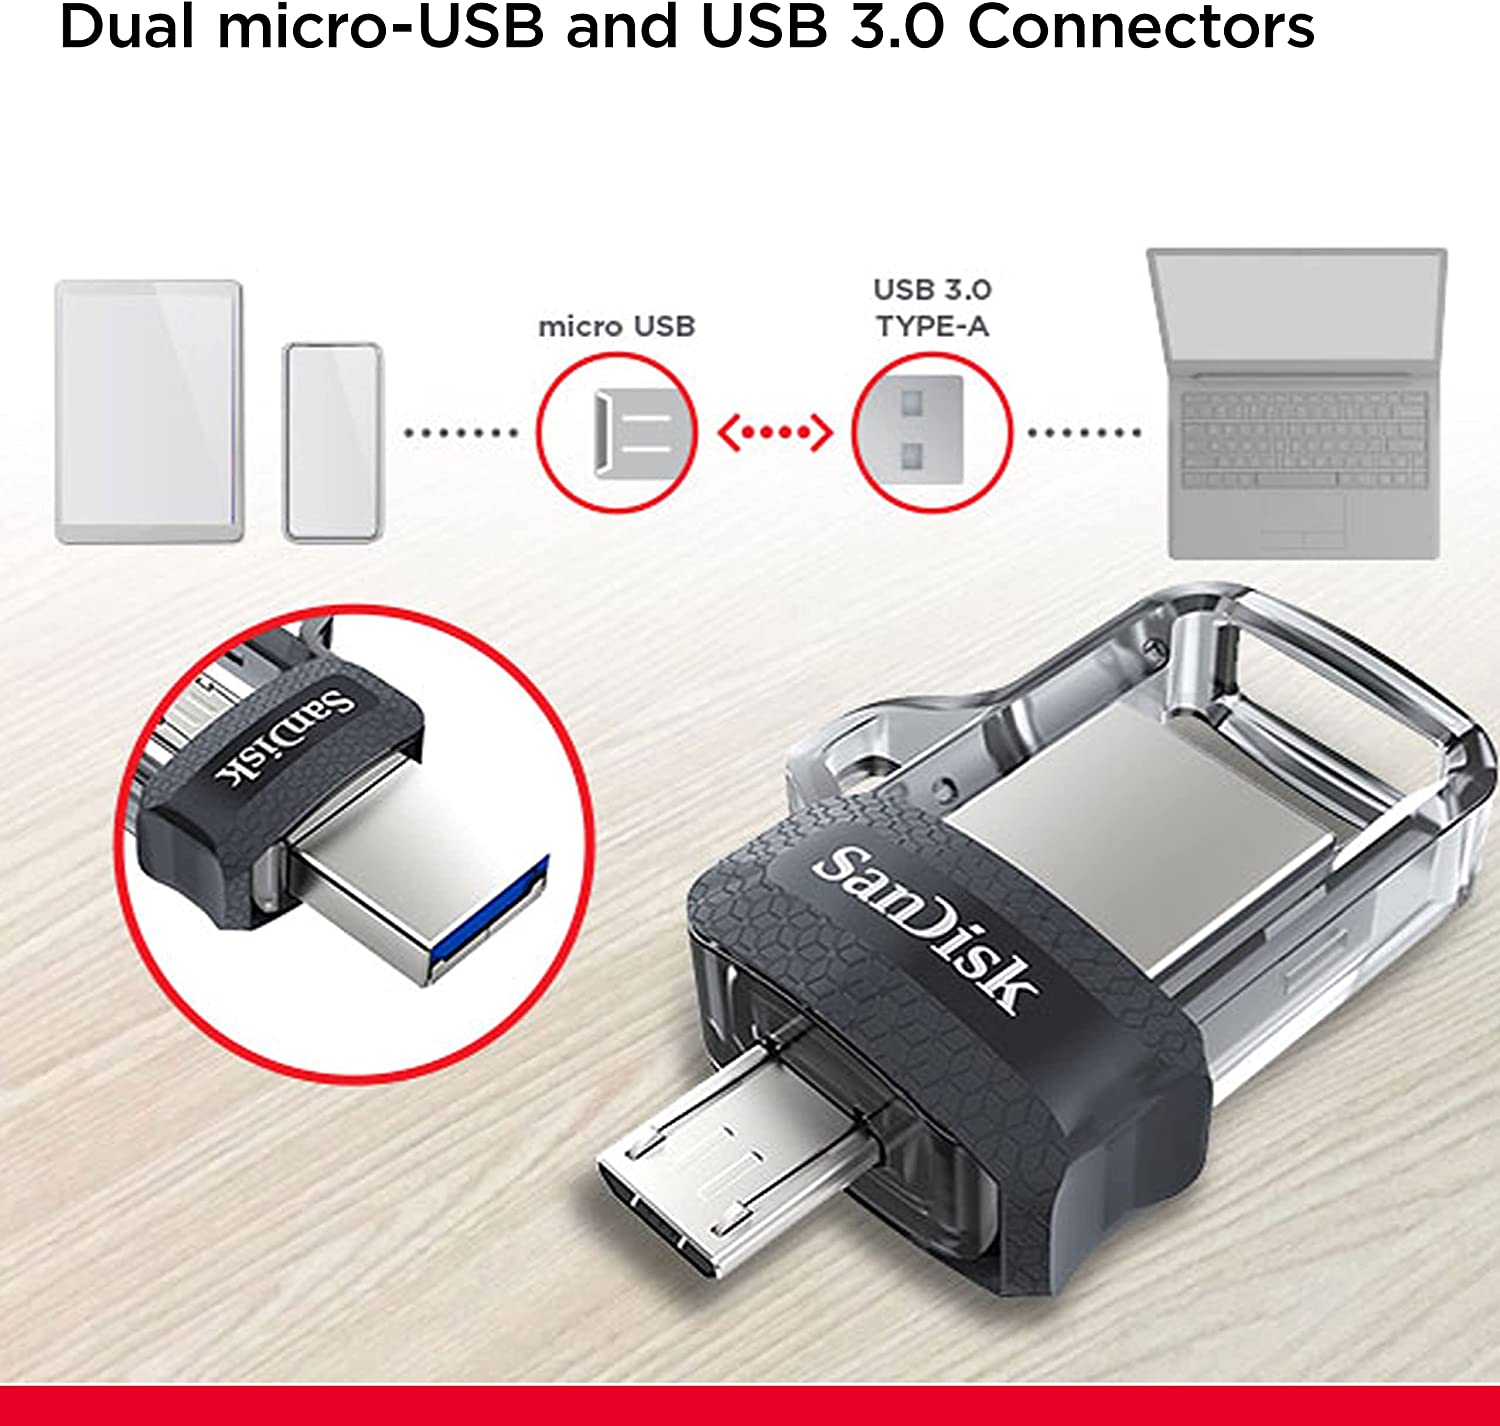 Dual Micro-USB and USB 3.0 Connectors